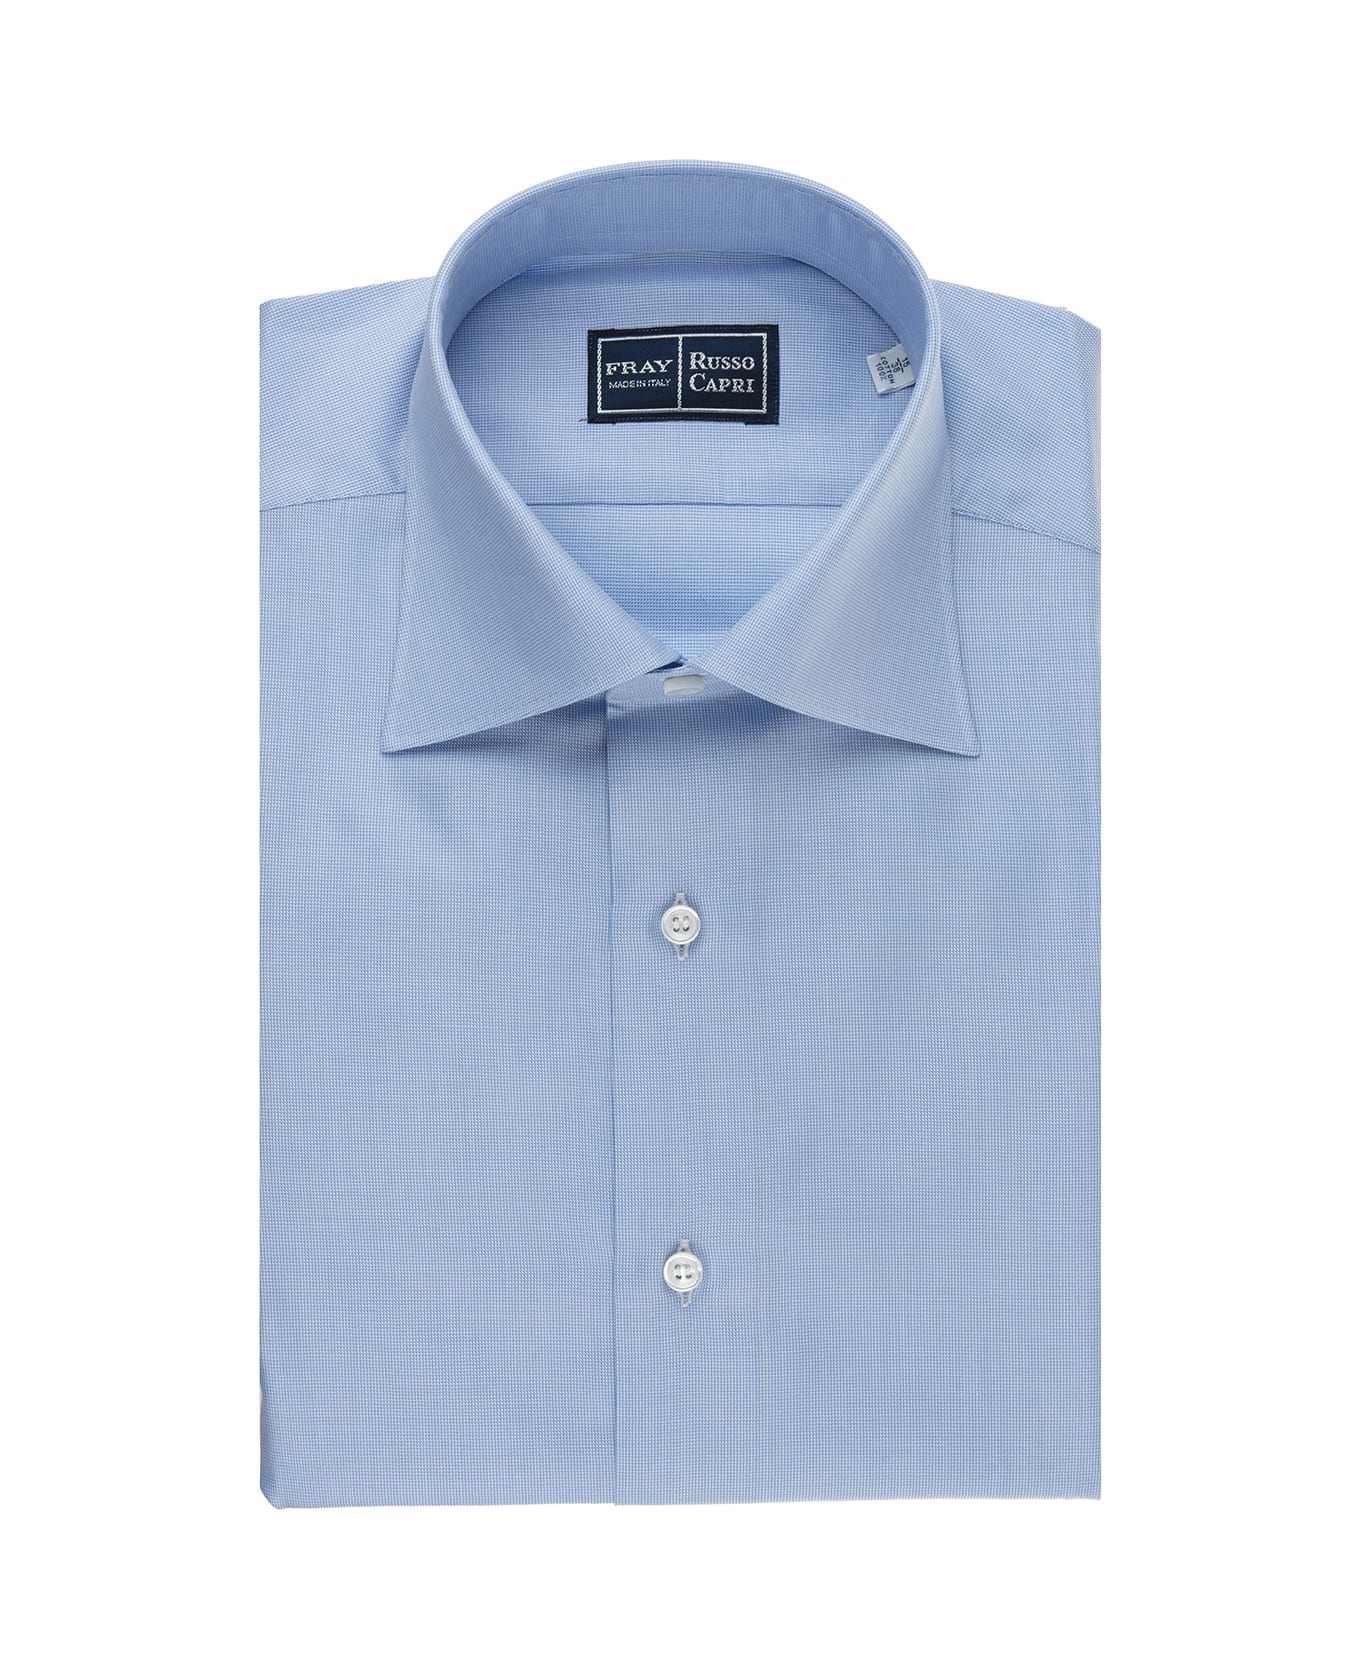 Fray Regular Fit Shirt In Light Blue Oxford Cotton - Blue シャツ